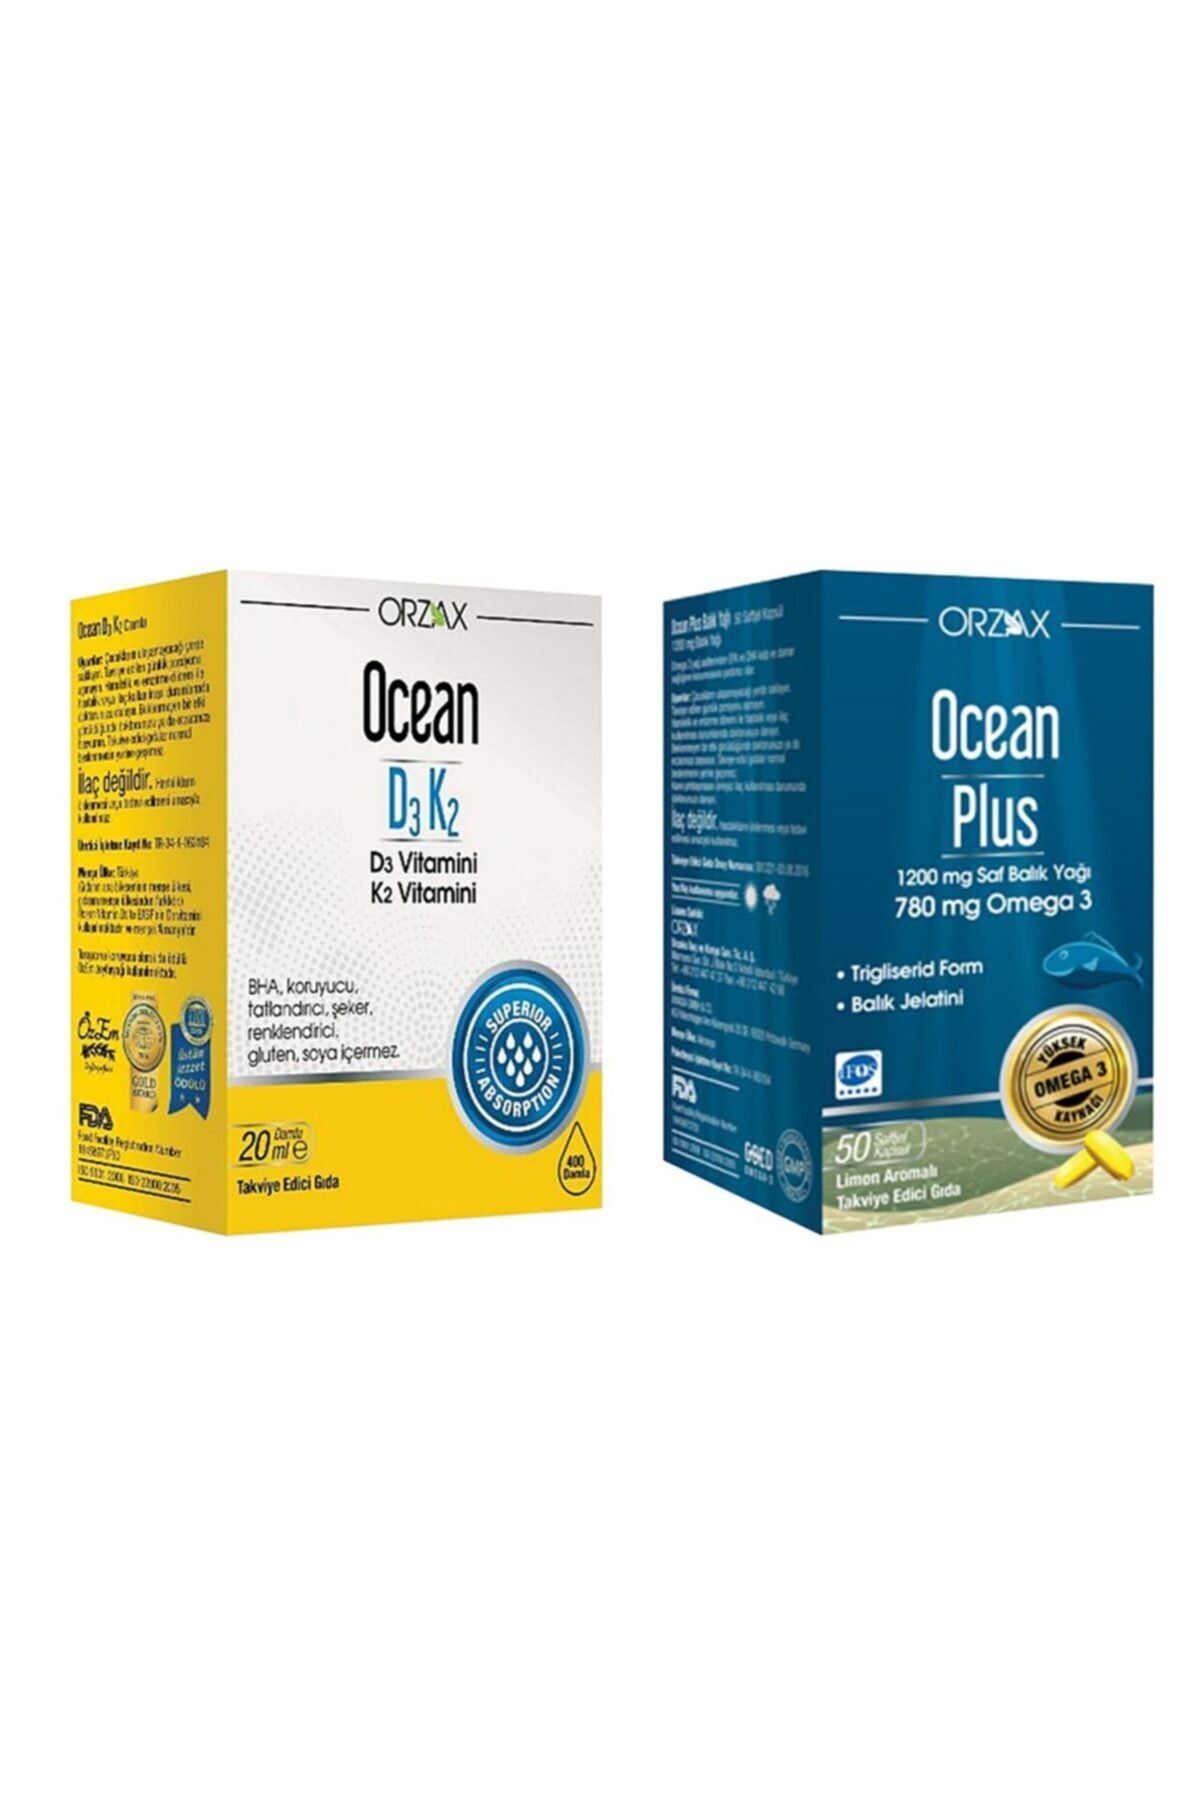 Ocean Ocean D3k2 Damla 20 ml + Ocean Plus 50 Kapsül